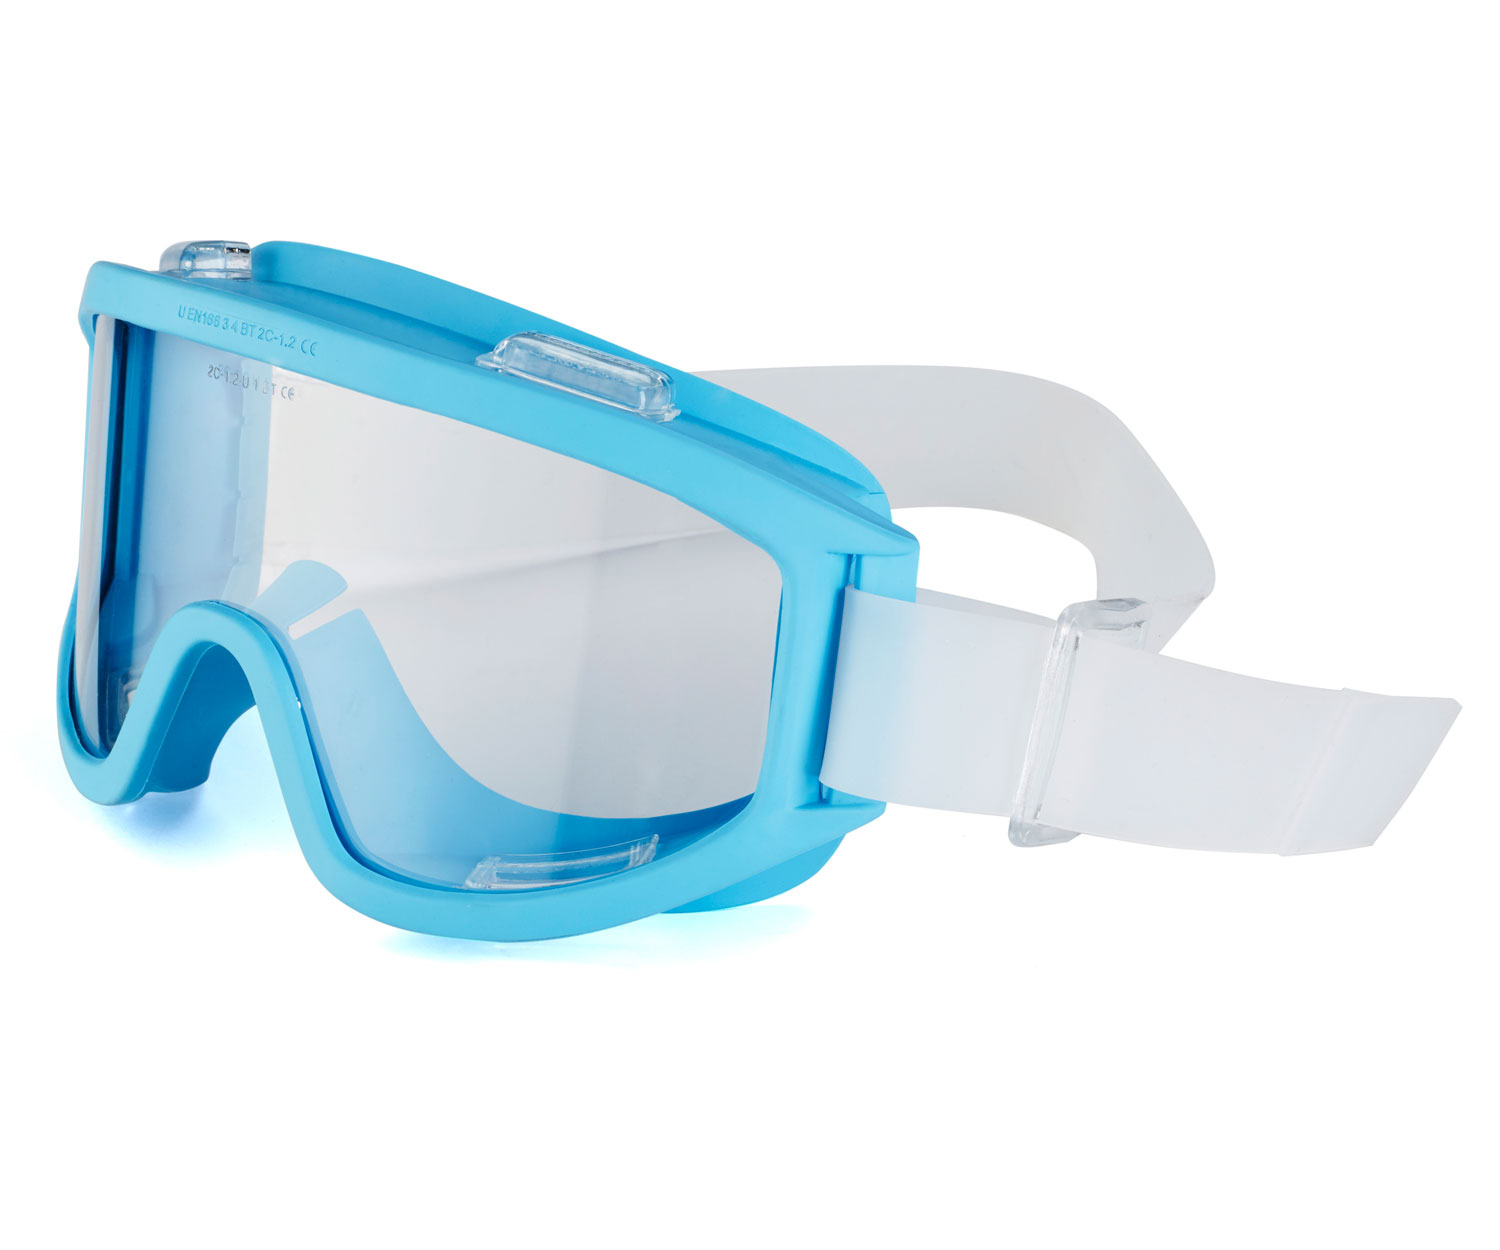 Reusable Safety Goggles Univet #611 Antifog